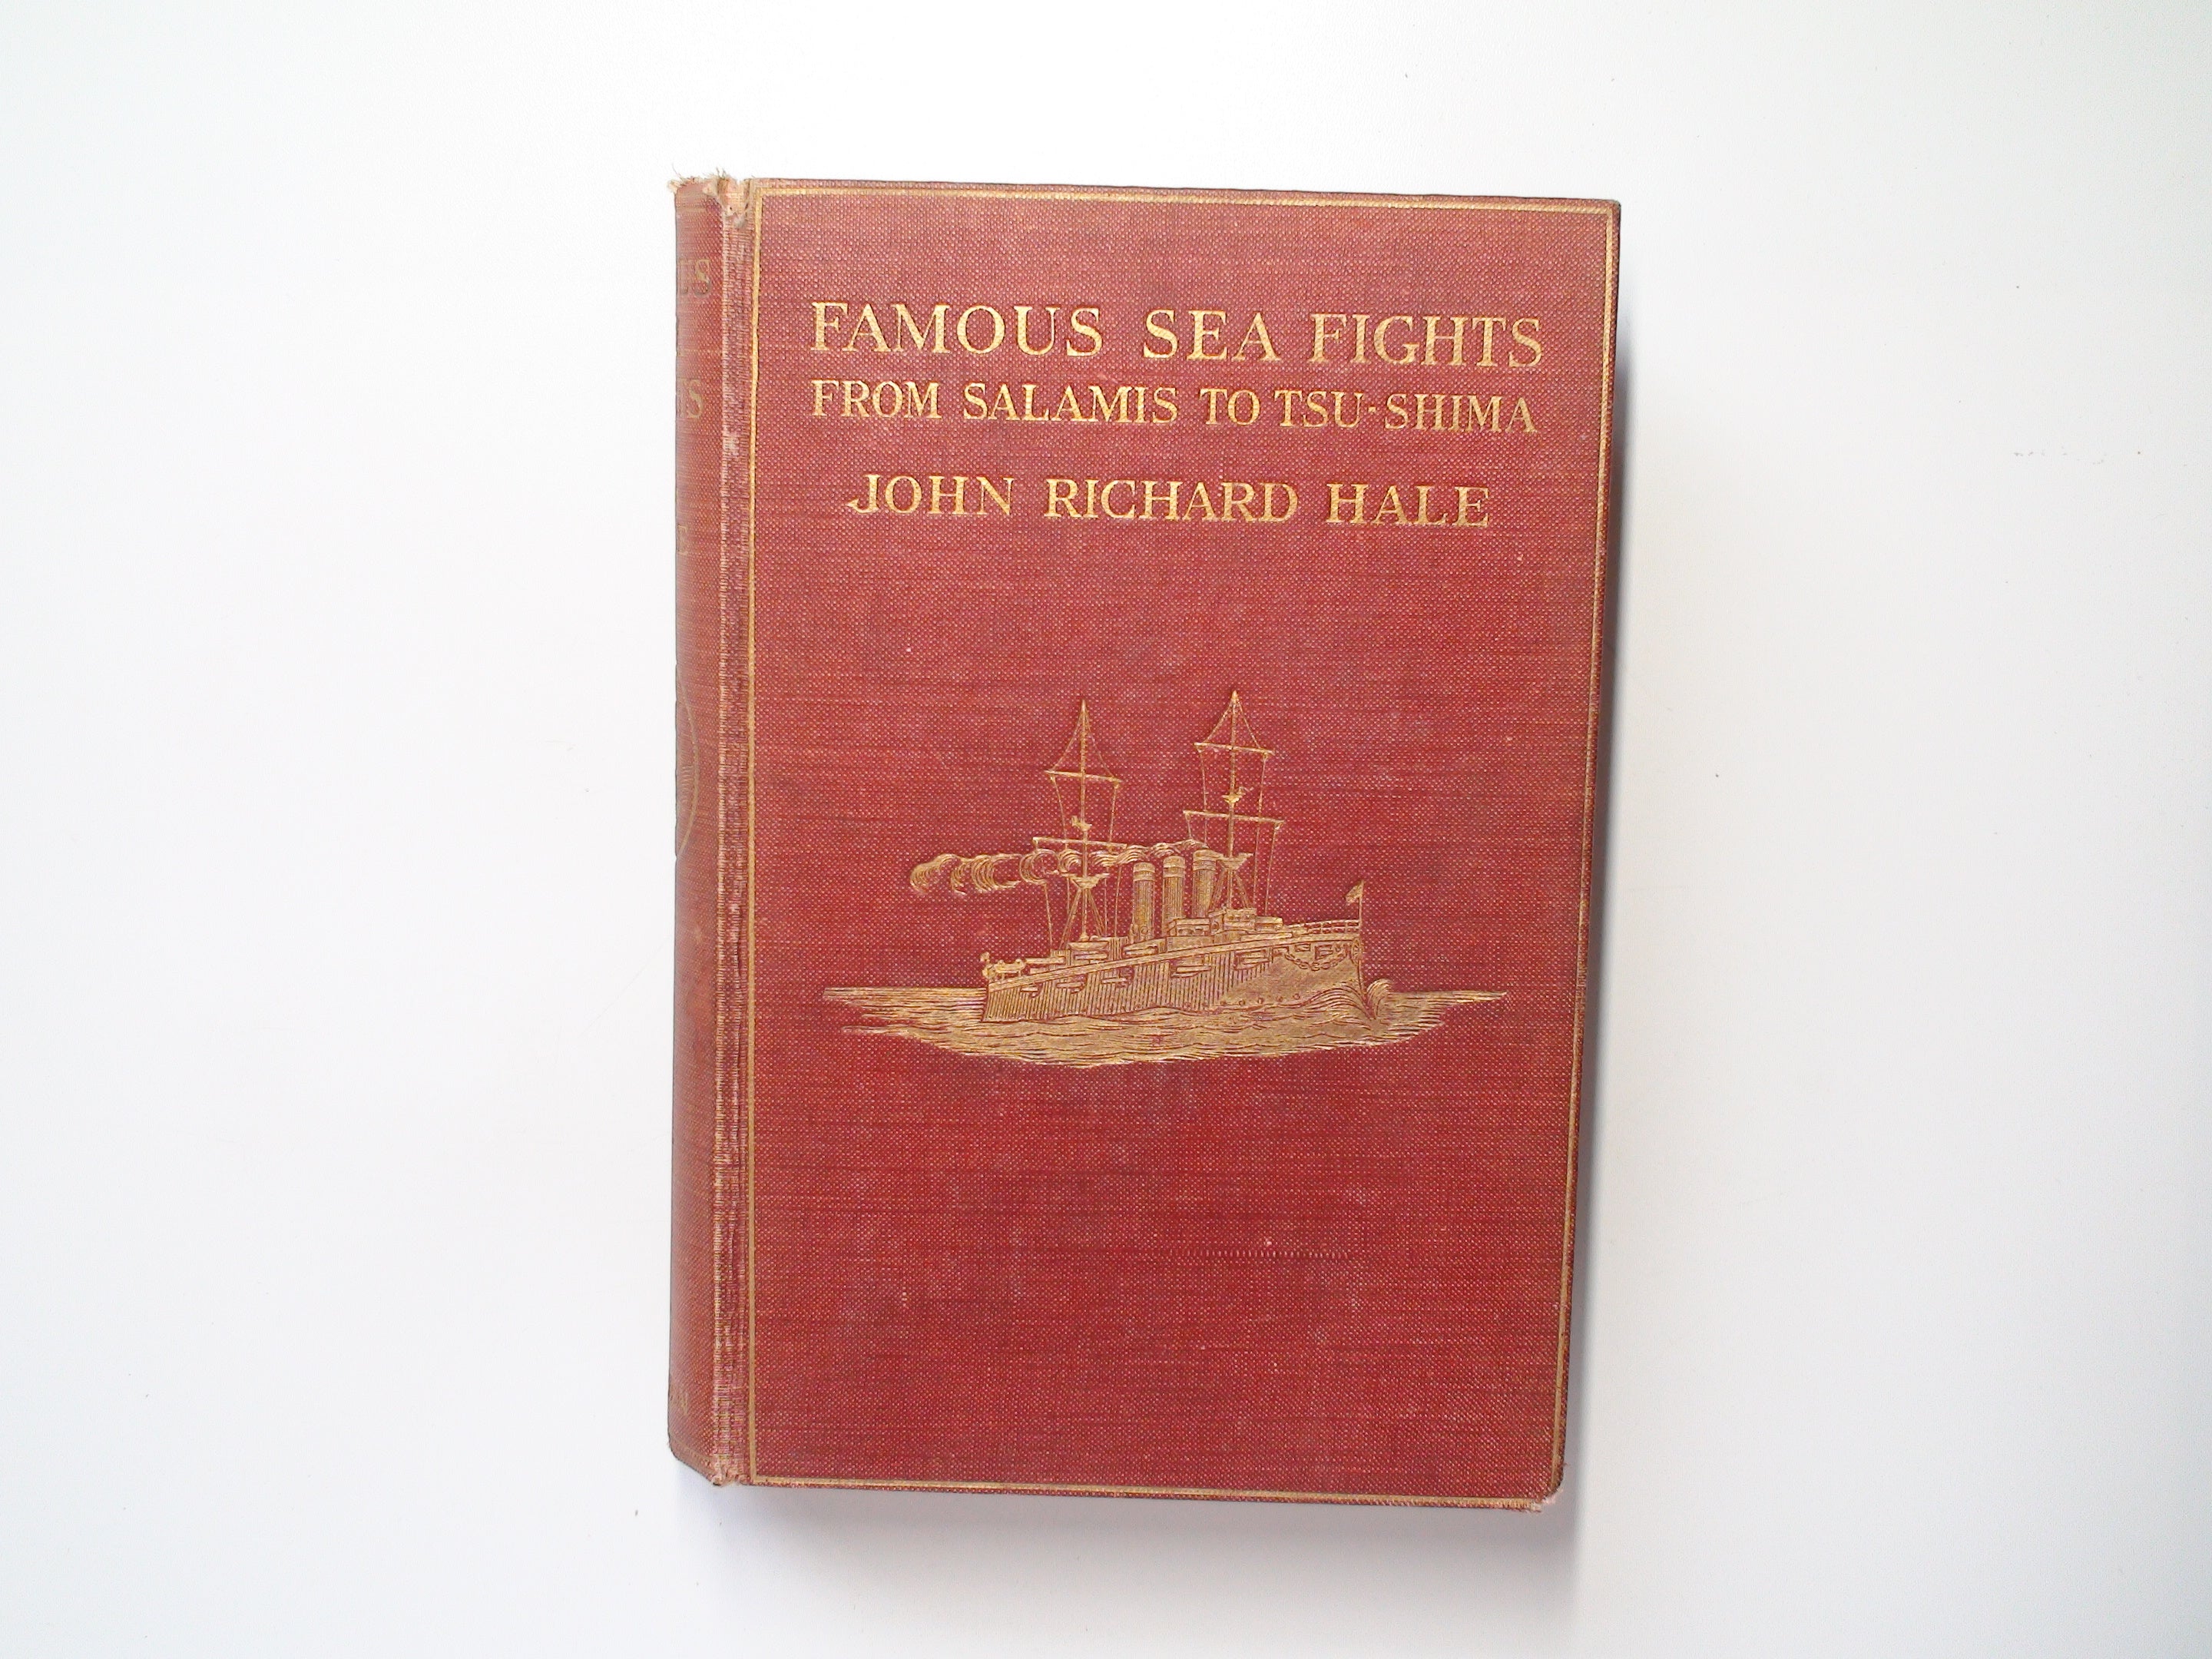 Famous Sea Fights From Salamis to Tsu-Shima, John Richard Hale, Illustrated, 1911